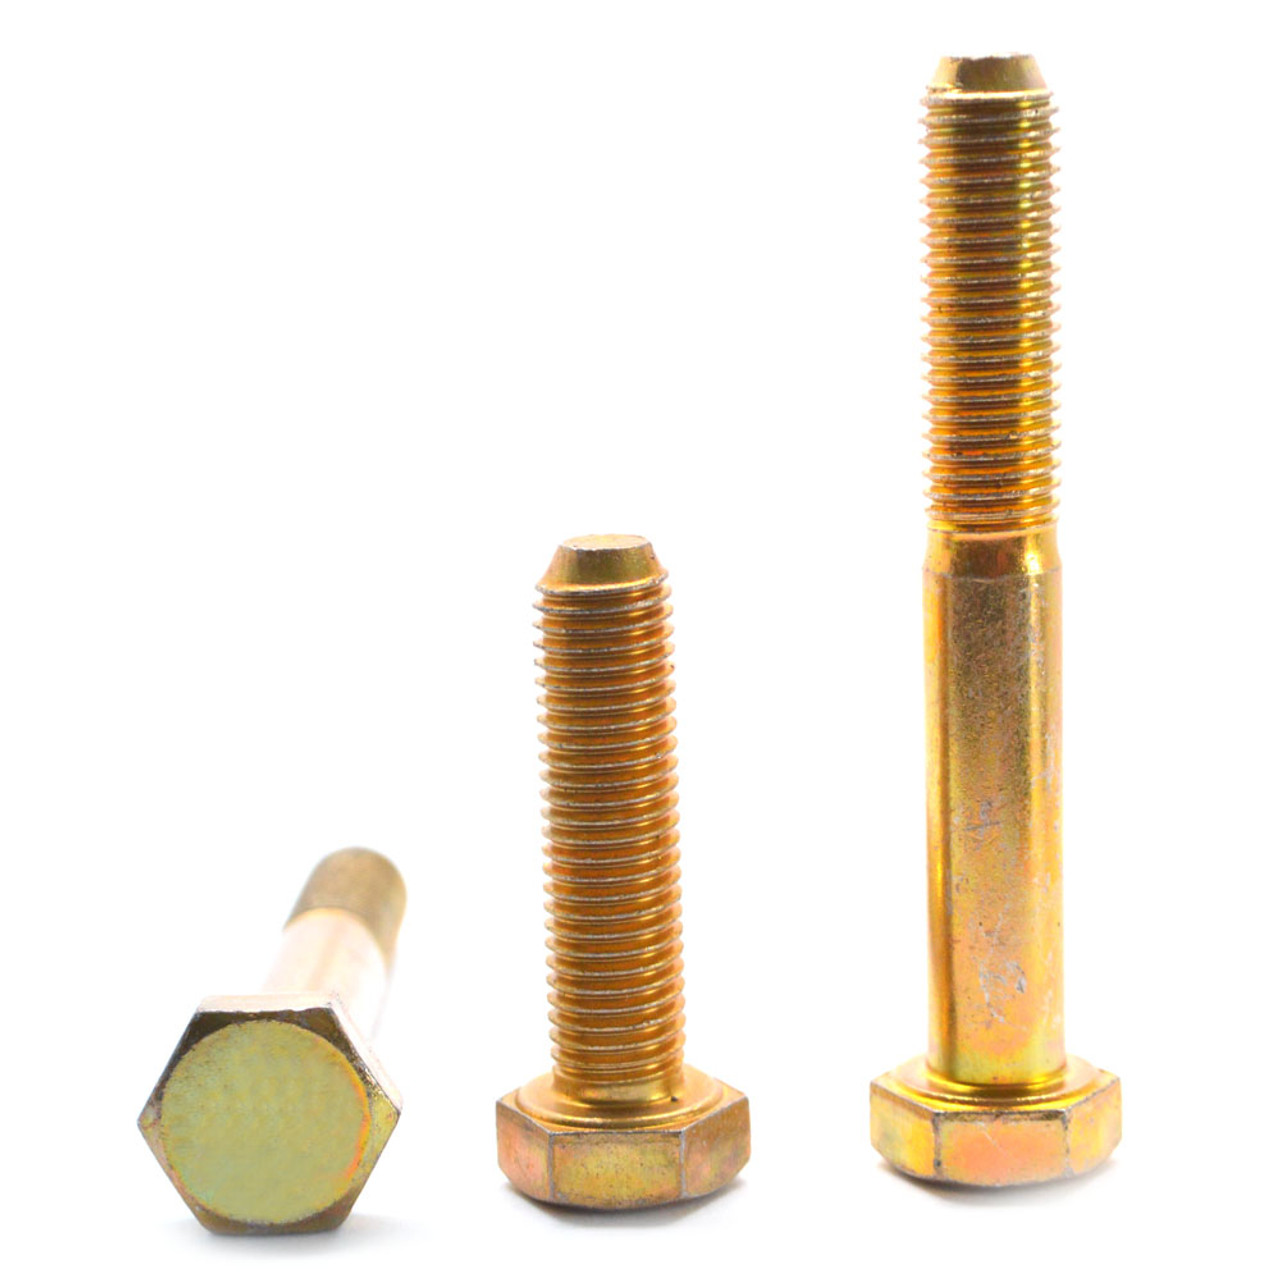 M22 x 2.50 x 80 MM (PT) Coarse Thread DIN 931 Class 10.9 Hex Cap Screw (Bolt) Alloy Steel Yellow Zinc Plated